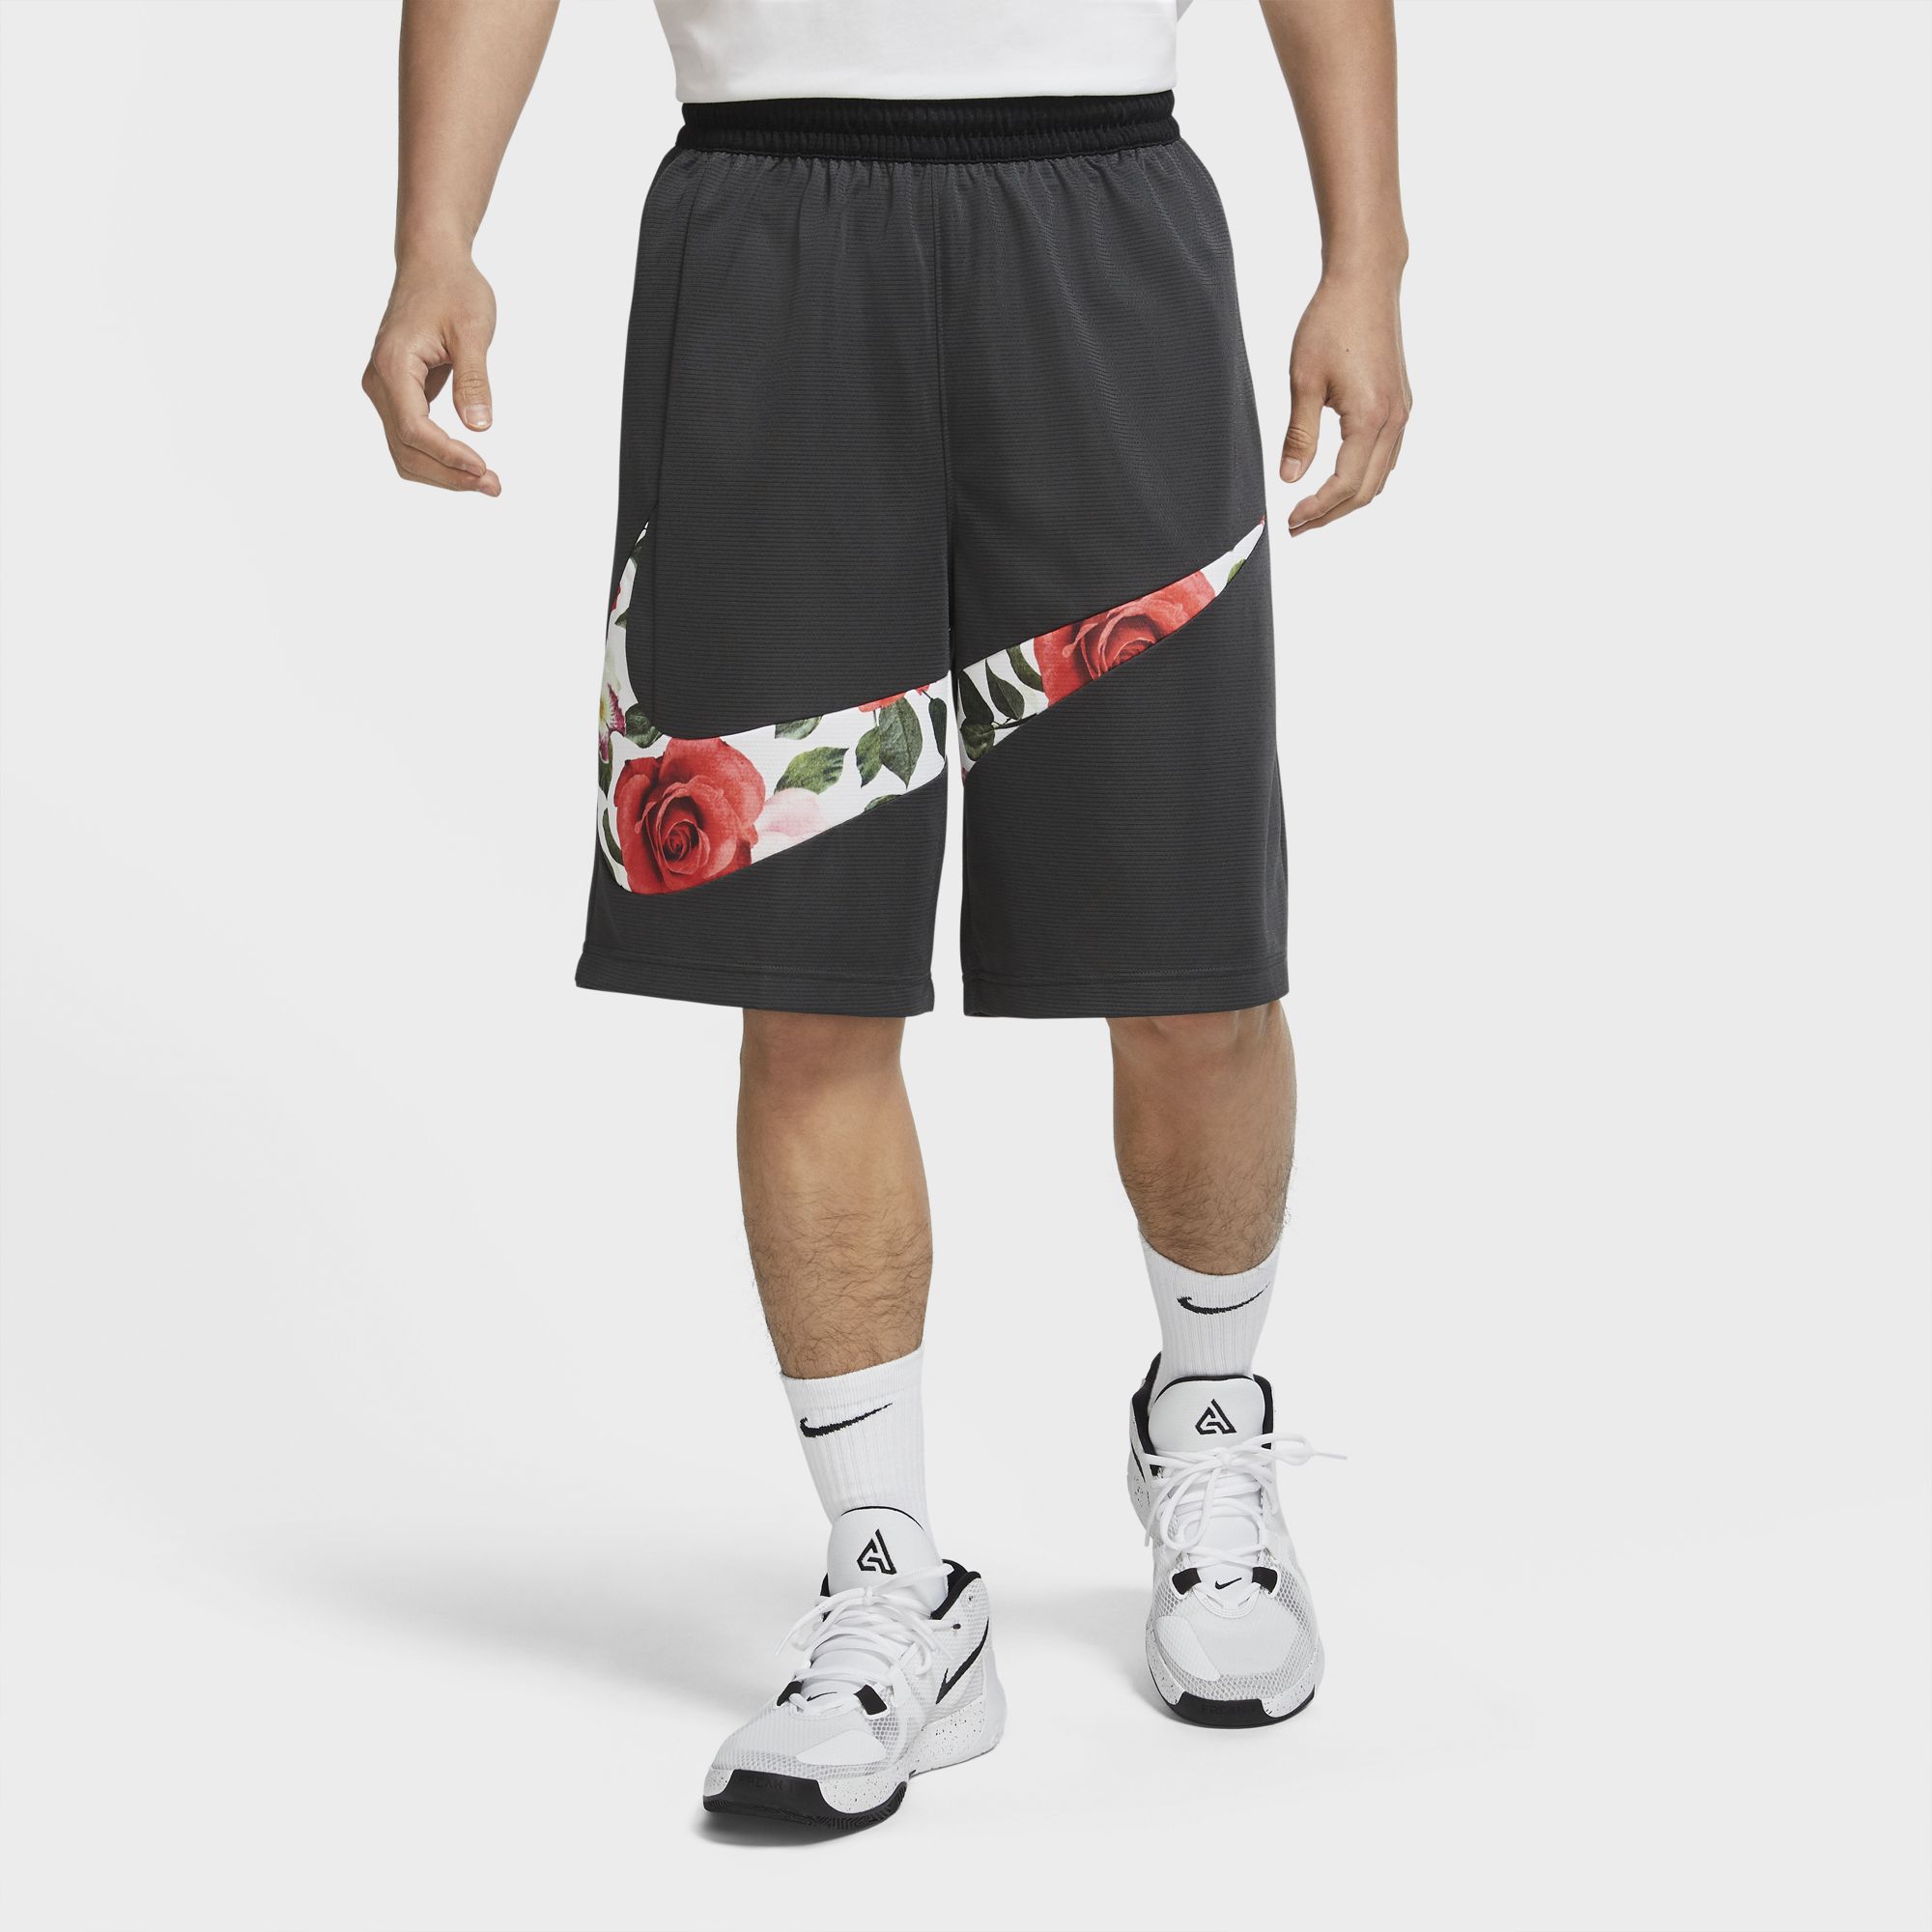 Баскетбольные шорты Nike Floral HBR - картинка